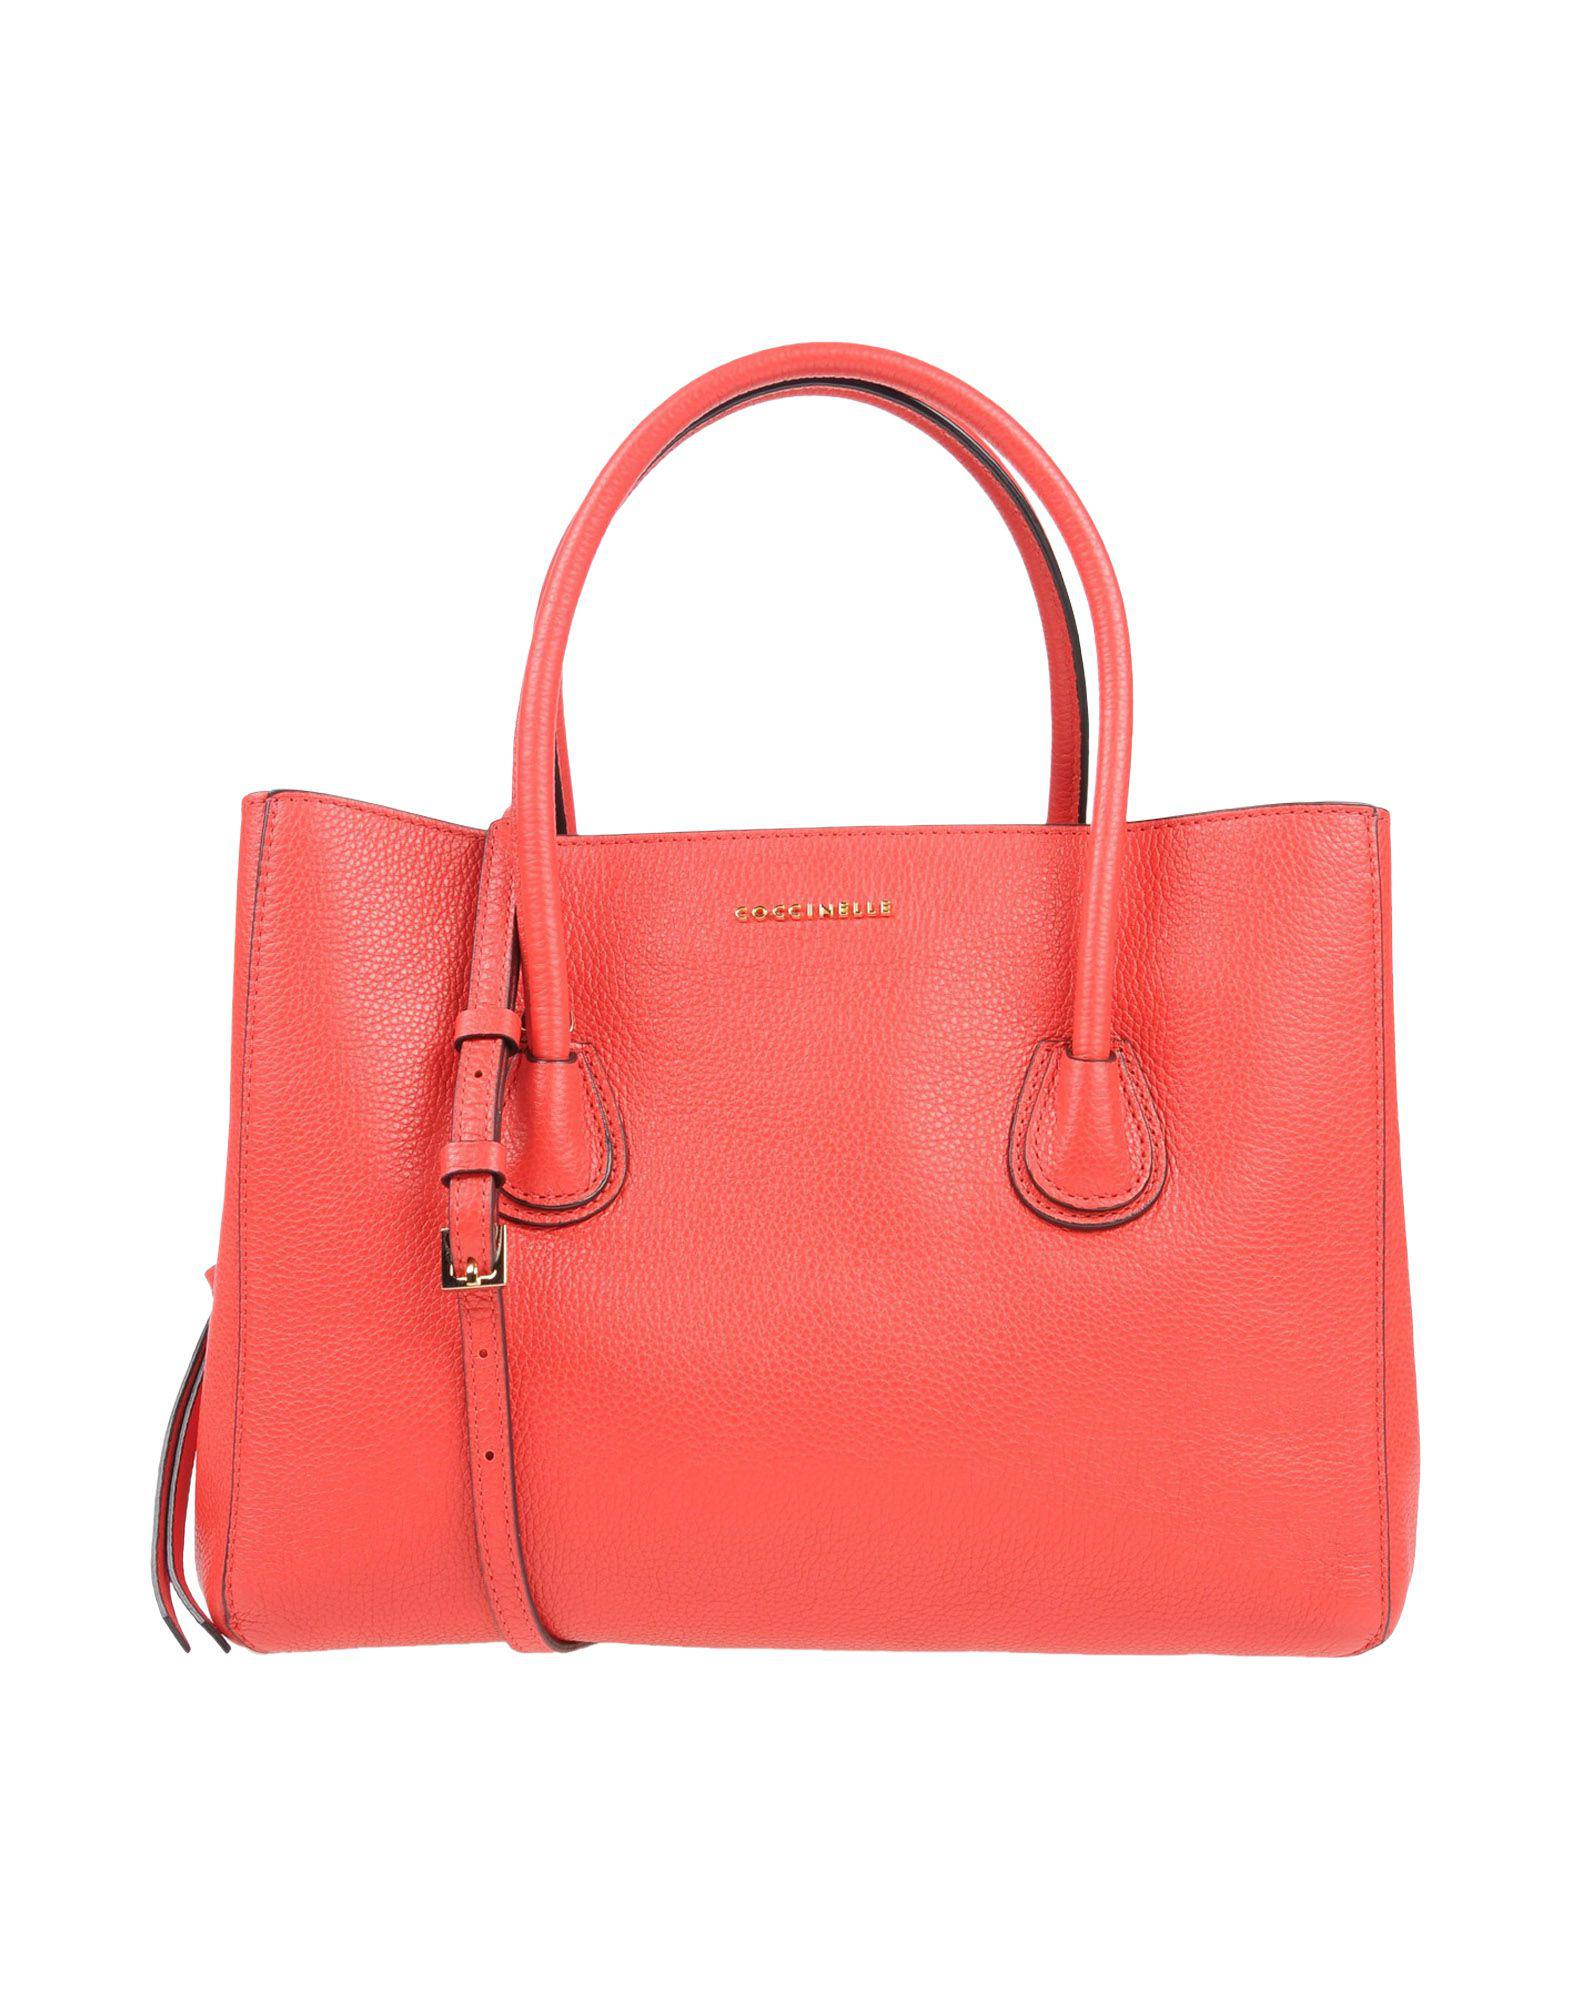 Coccinelle Handbag in Red - Lyst